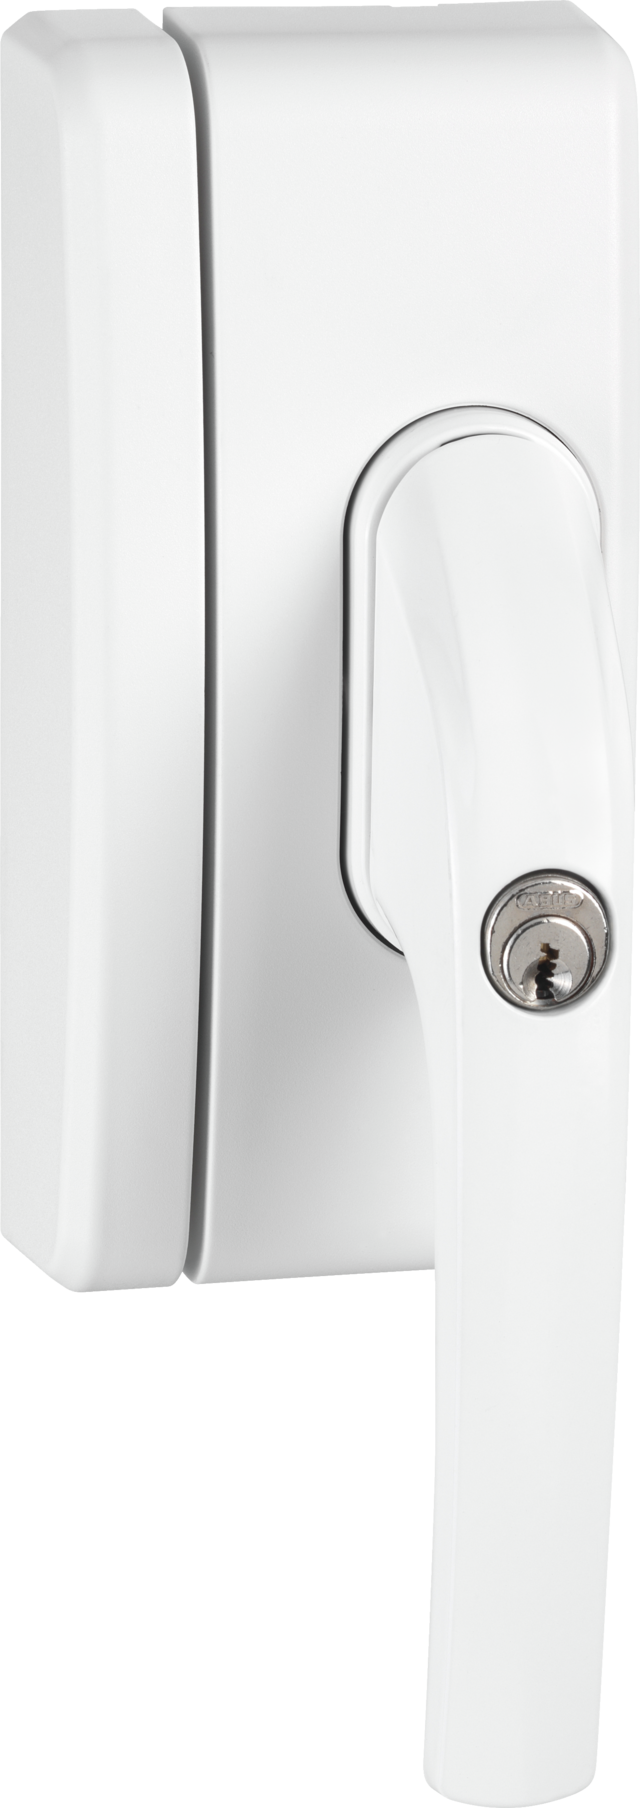 Secvest wireless window handle lock FO 400 E - AL0125 (white) front view right